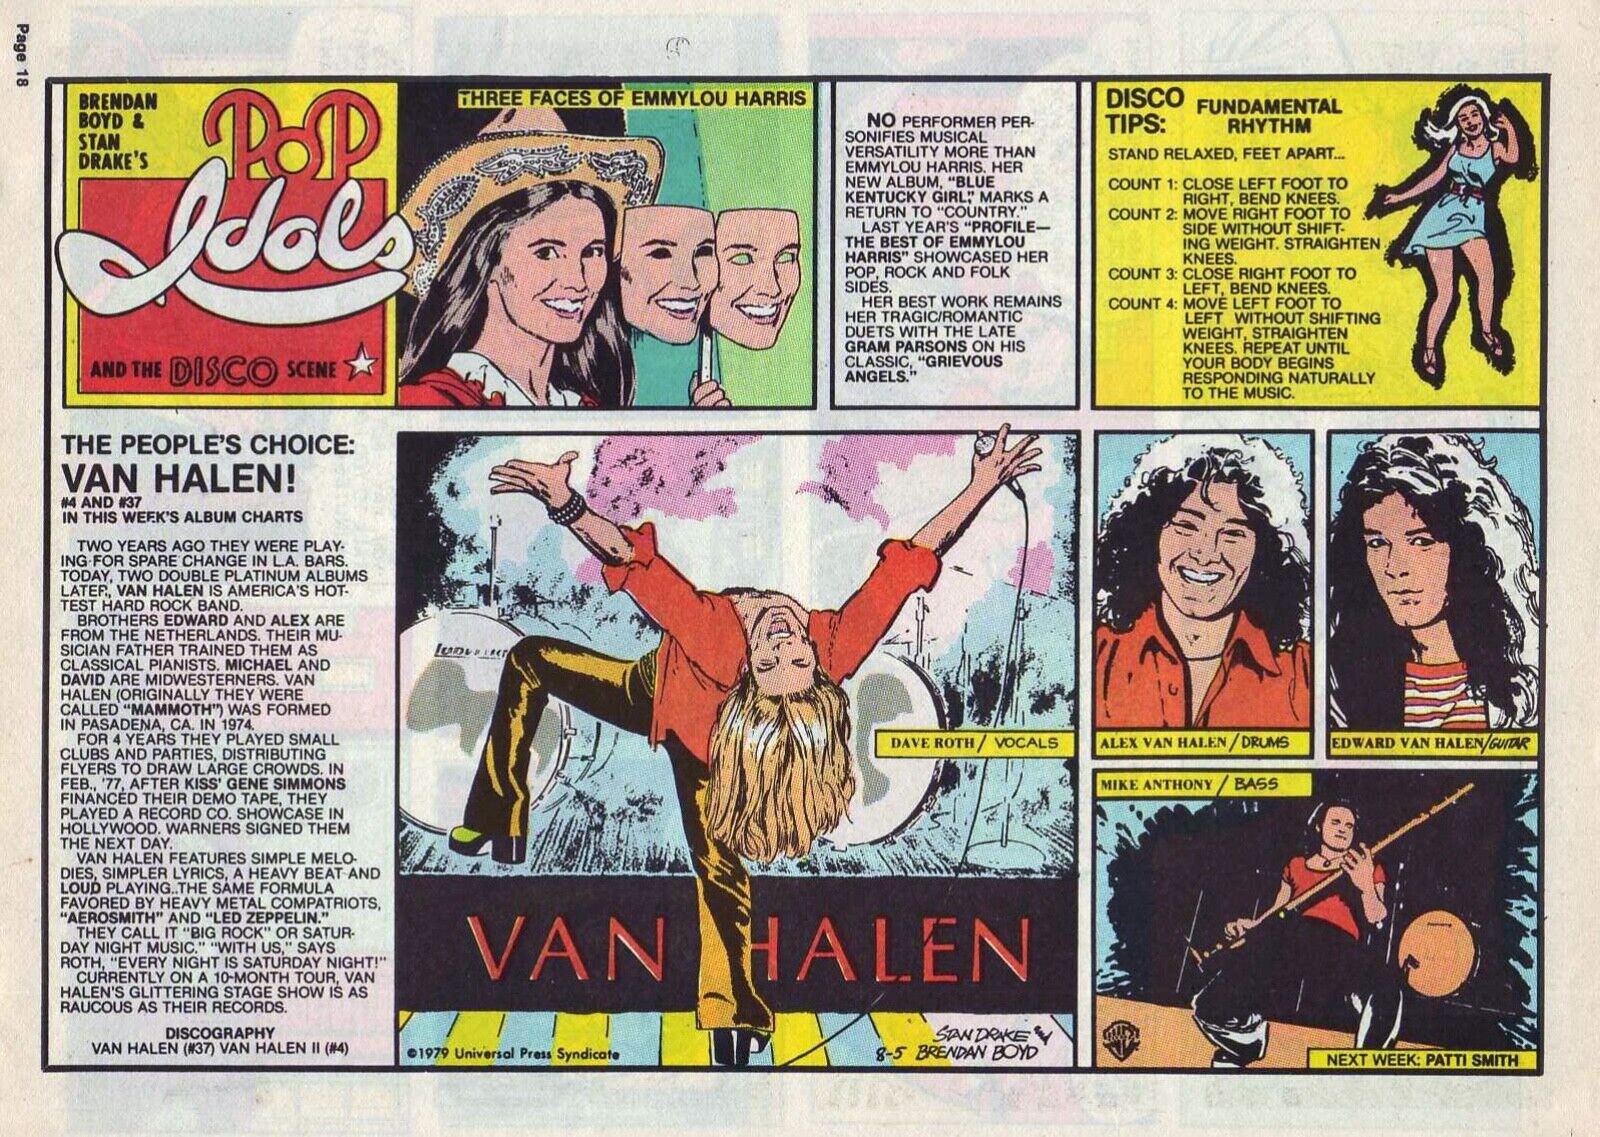 Pop Idols by Stan Drake - Van Halen - full page Sunday comic - August 5, 1979